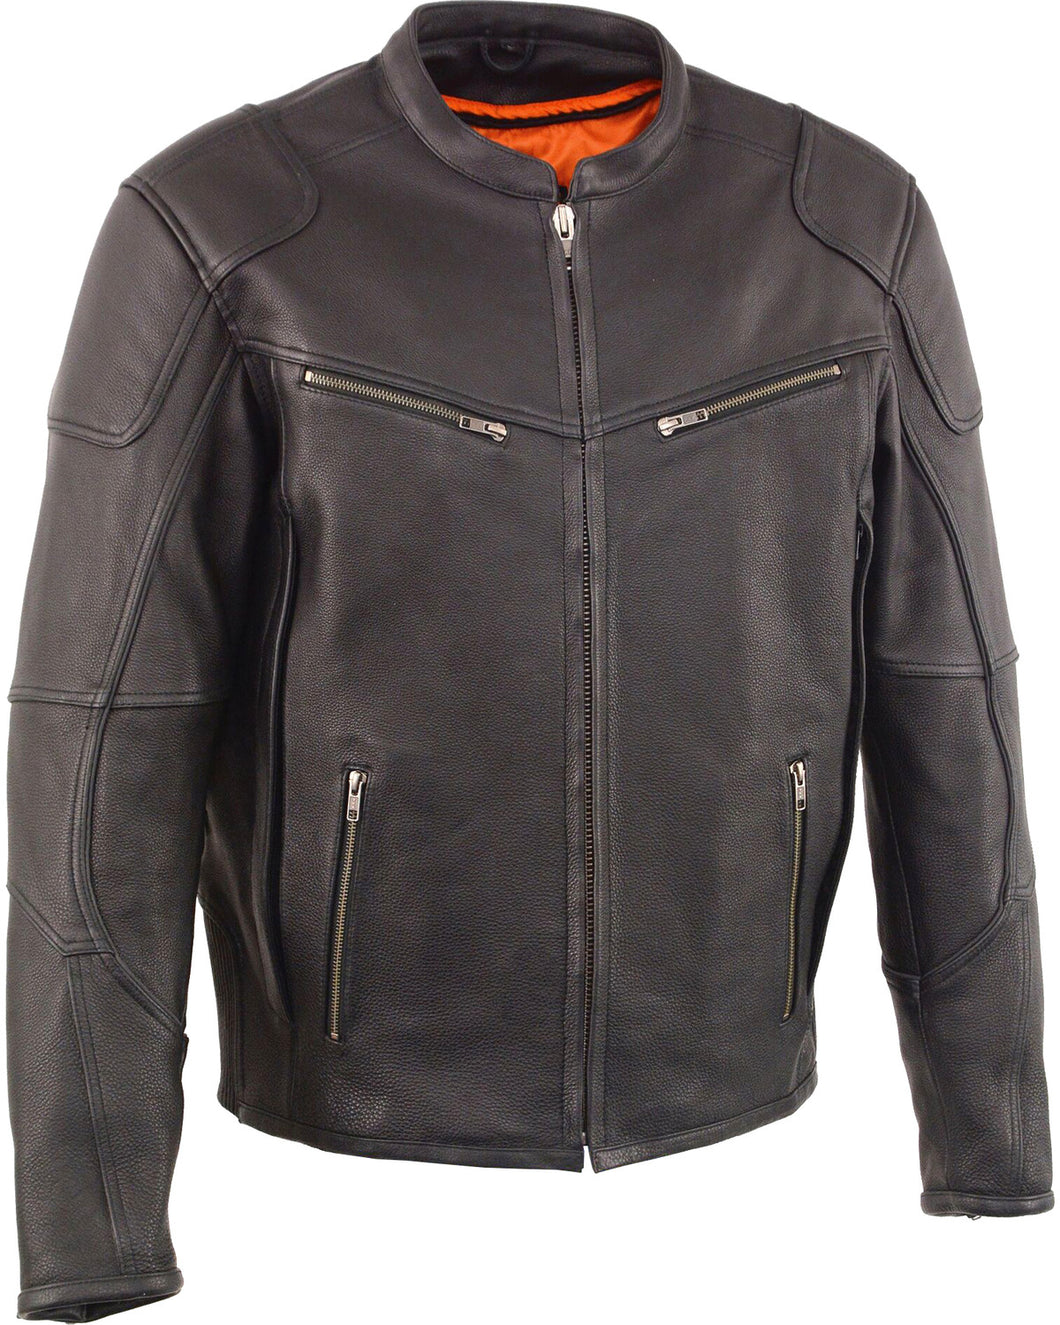 Men's Black Cool Tec Leather Biker Jacket 